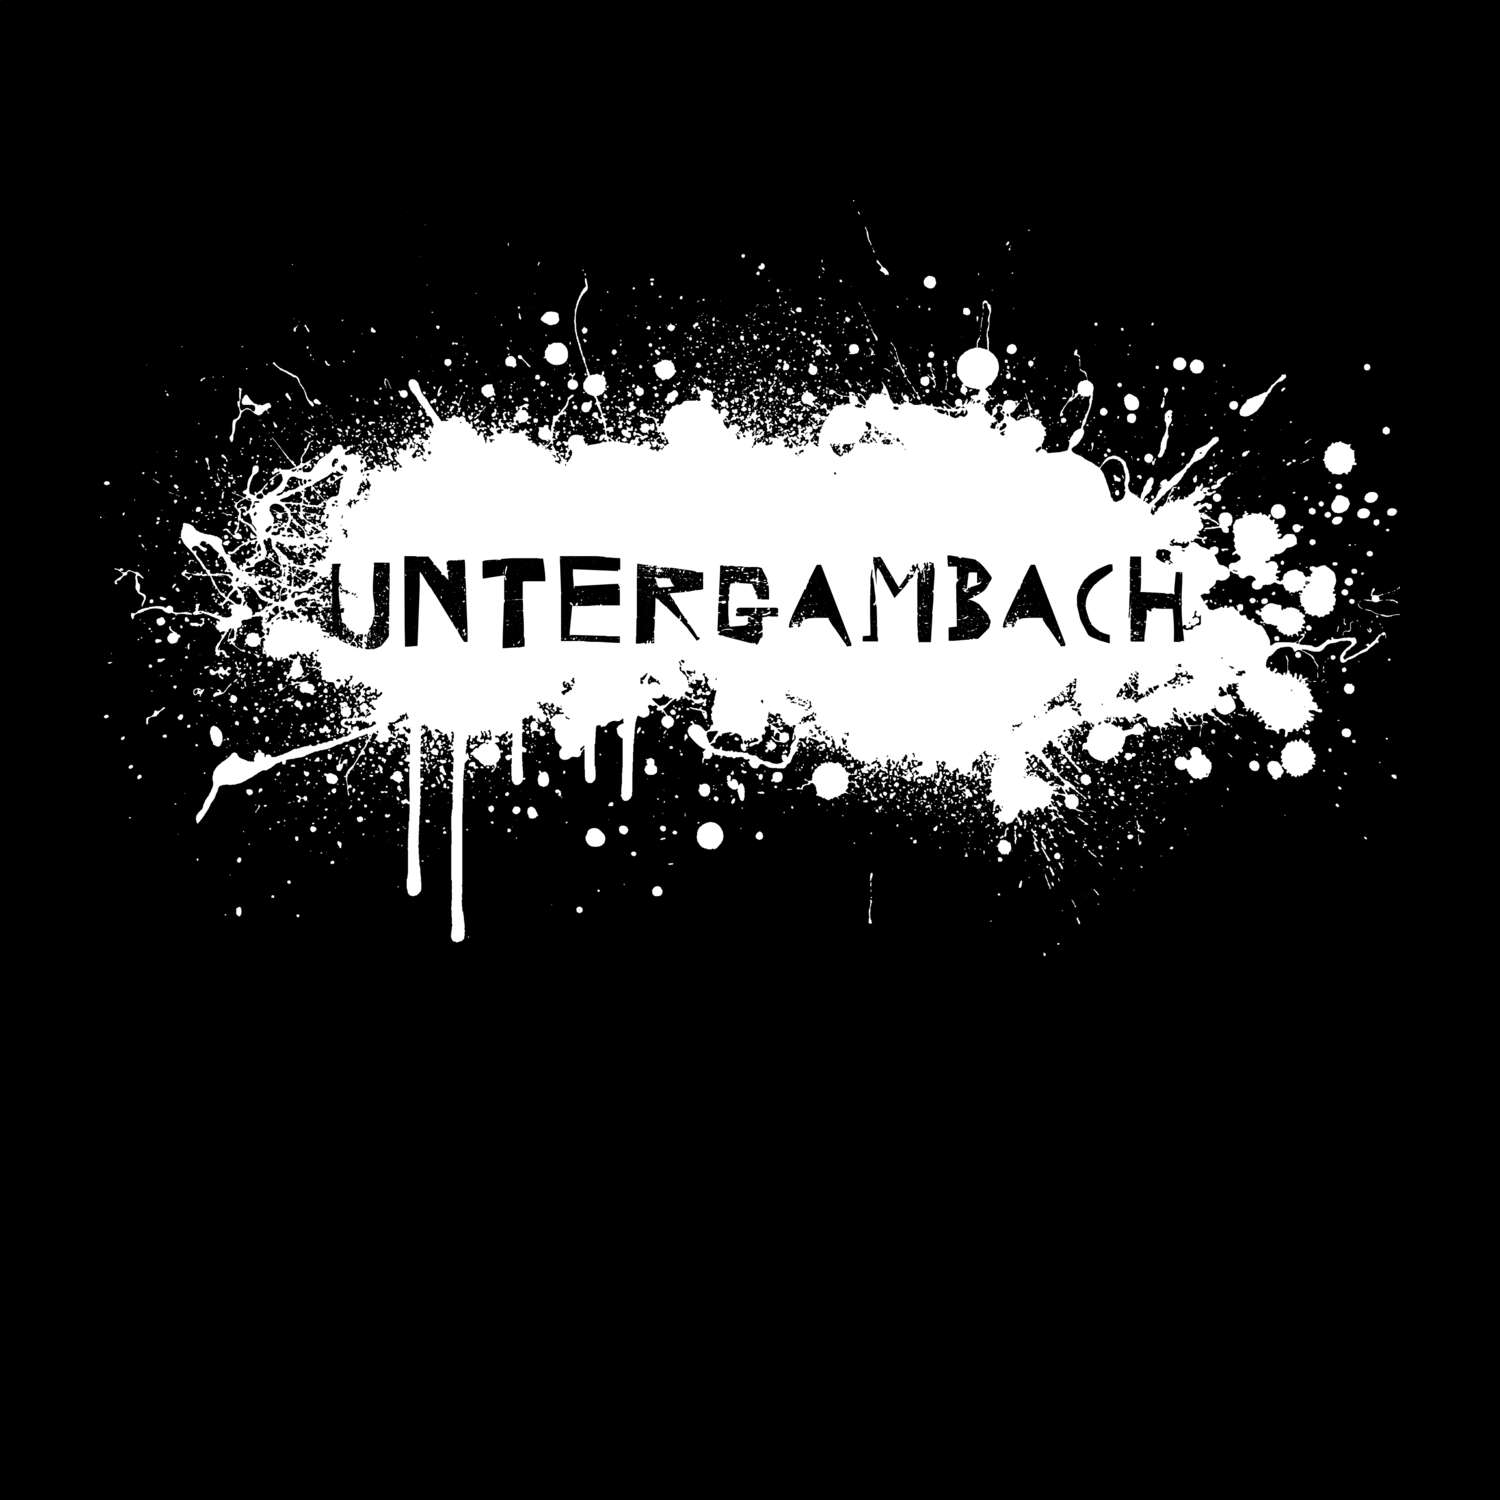 Untergambach T-Shirt »Paint Splash Punk«